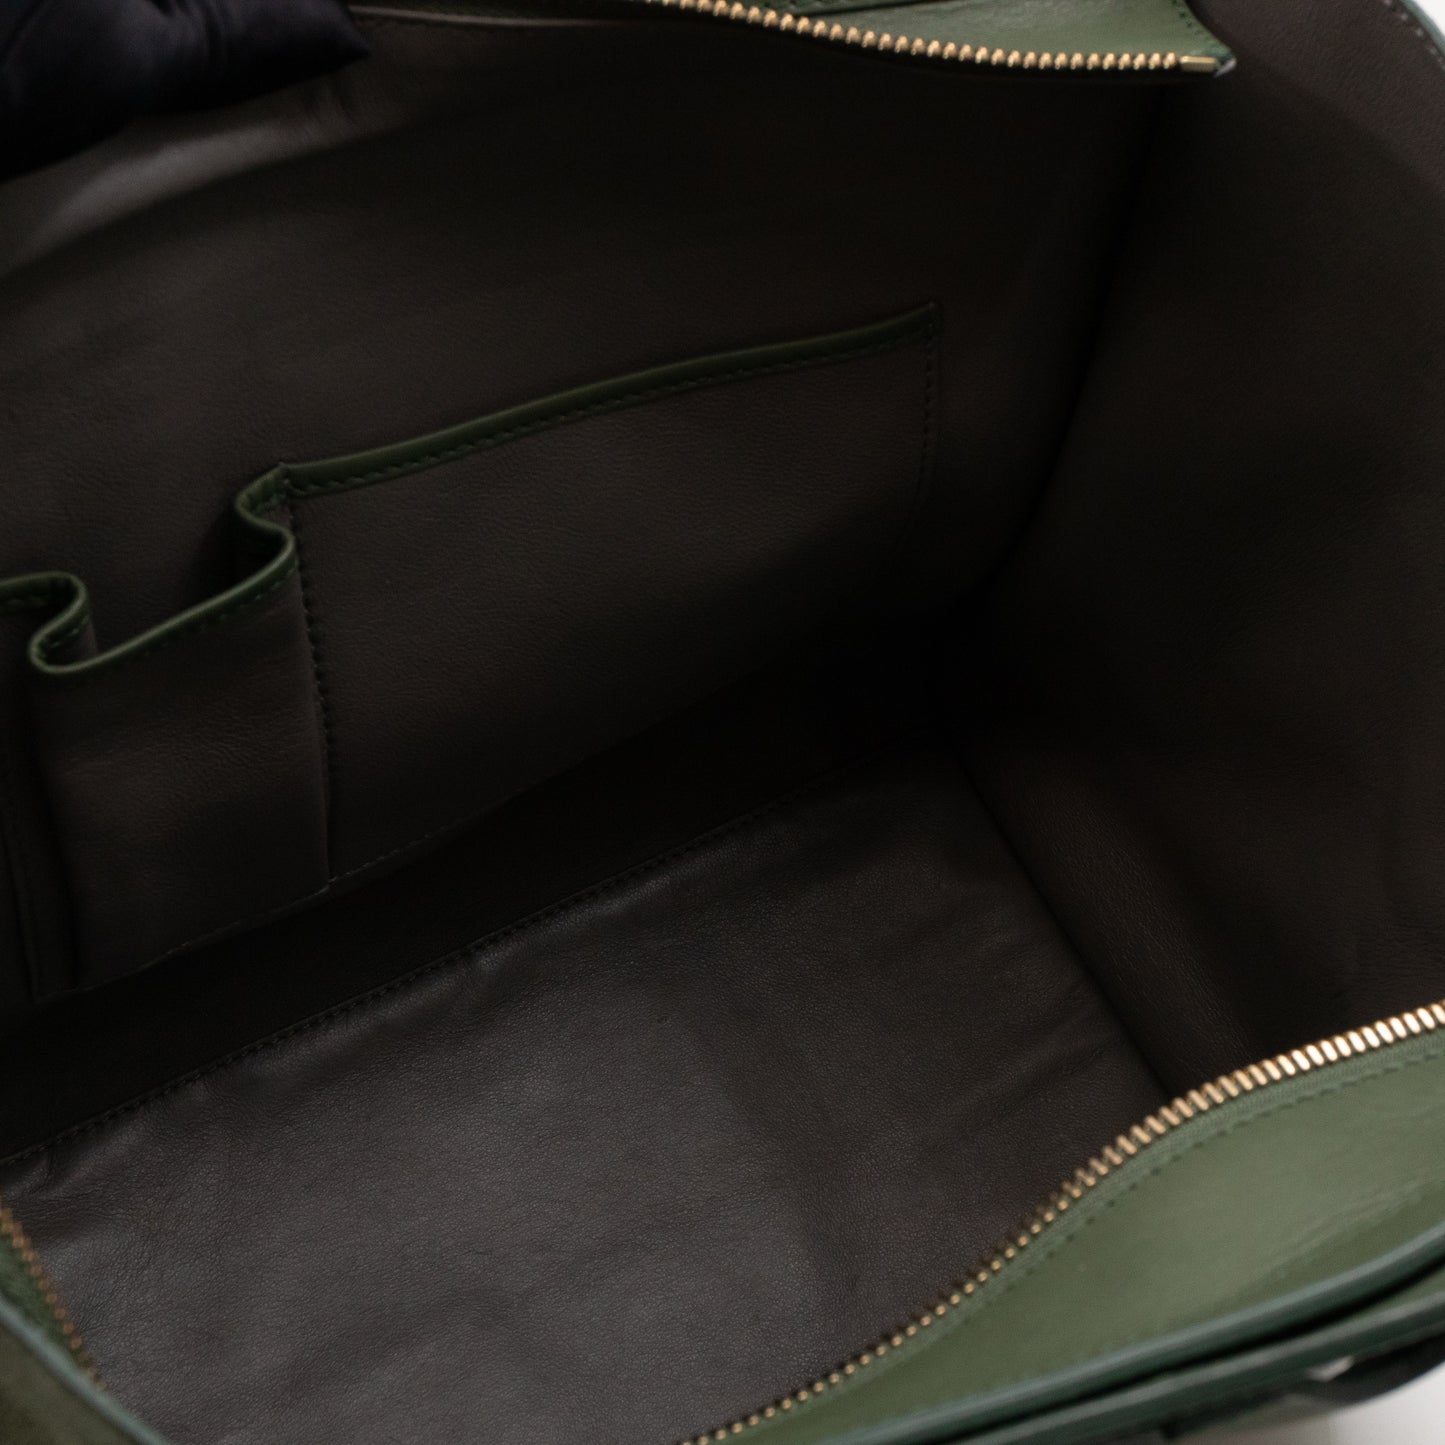 Mini Luggage Green Suede Leather